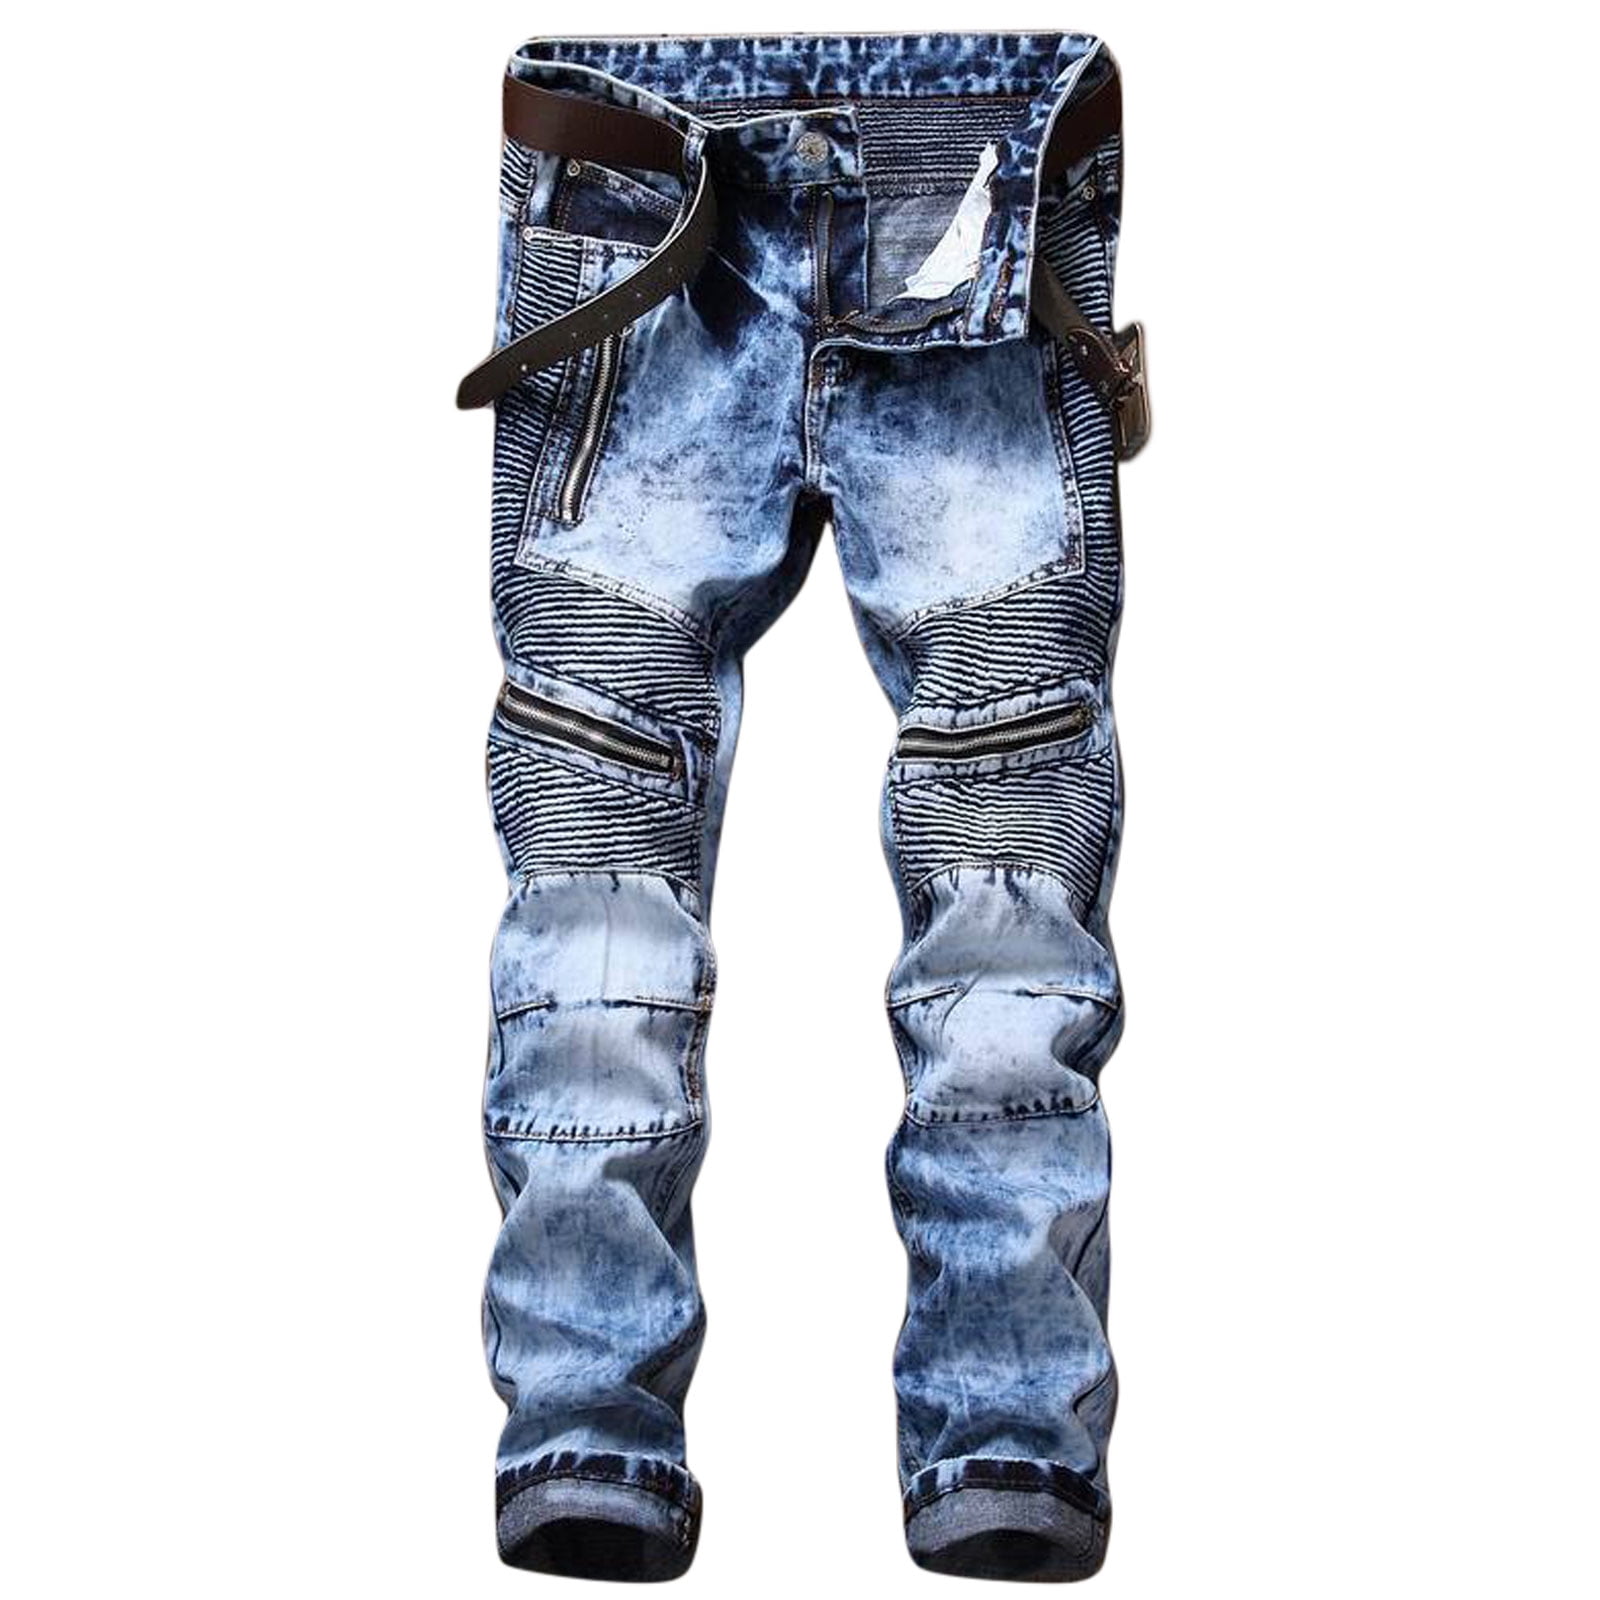 GENEMA Hip Hop Moto Biker Jeans with Zipper Decoration Vintage Washed Ruched Slim Fit Denim Pants Trousers Streetwear Walmart.com